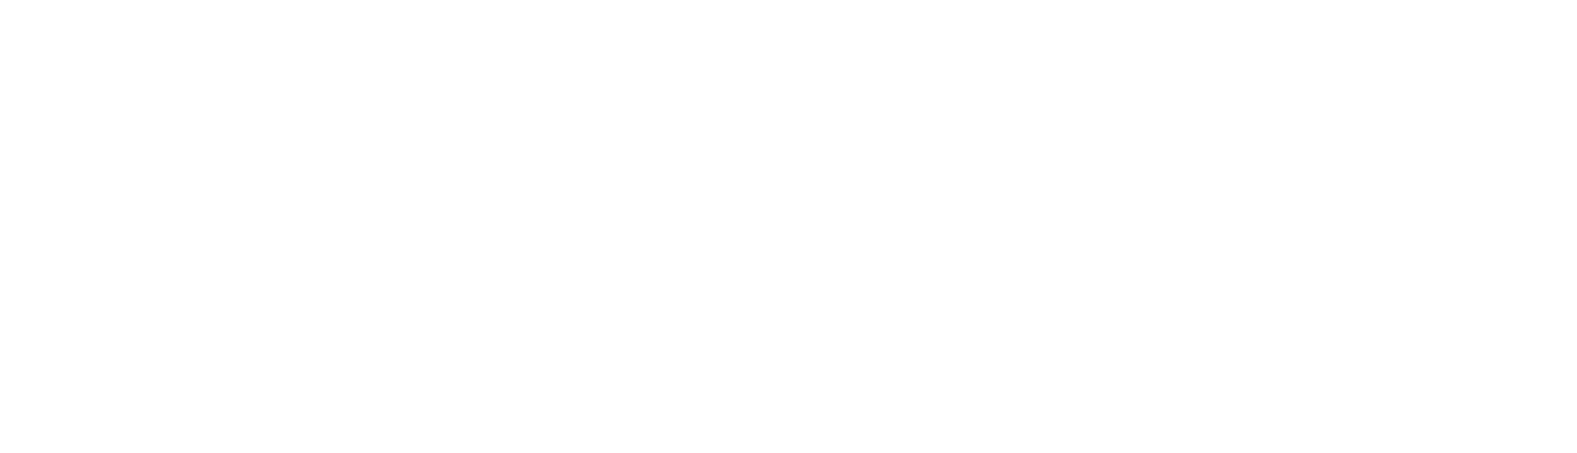 Allego logo grand pour les fonds sombres (PNG transparent)